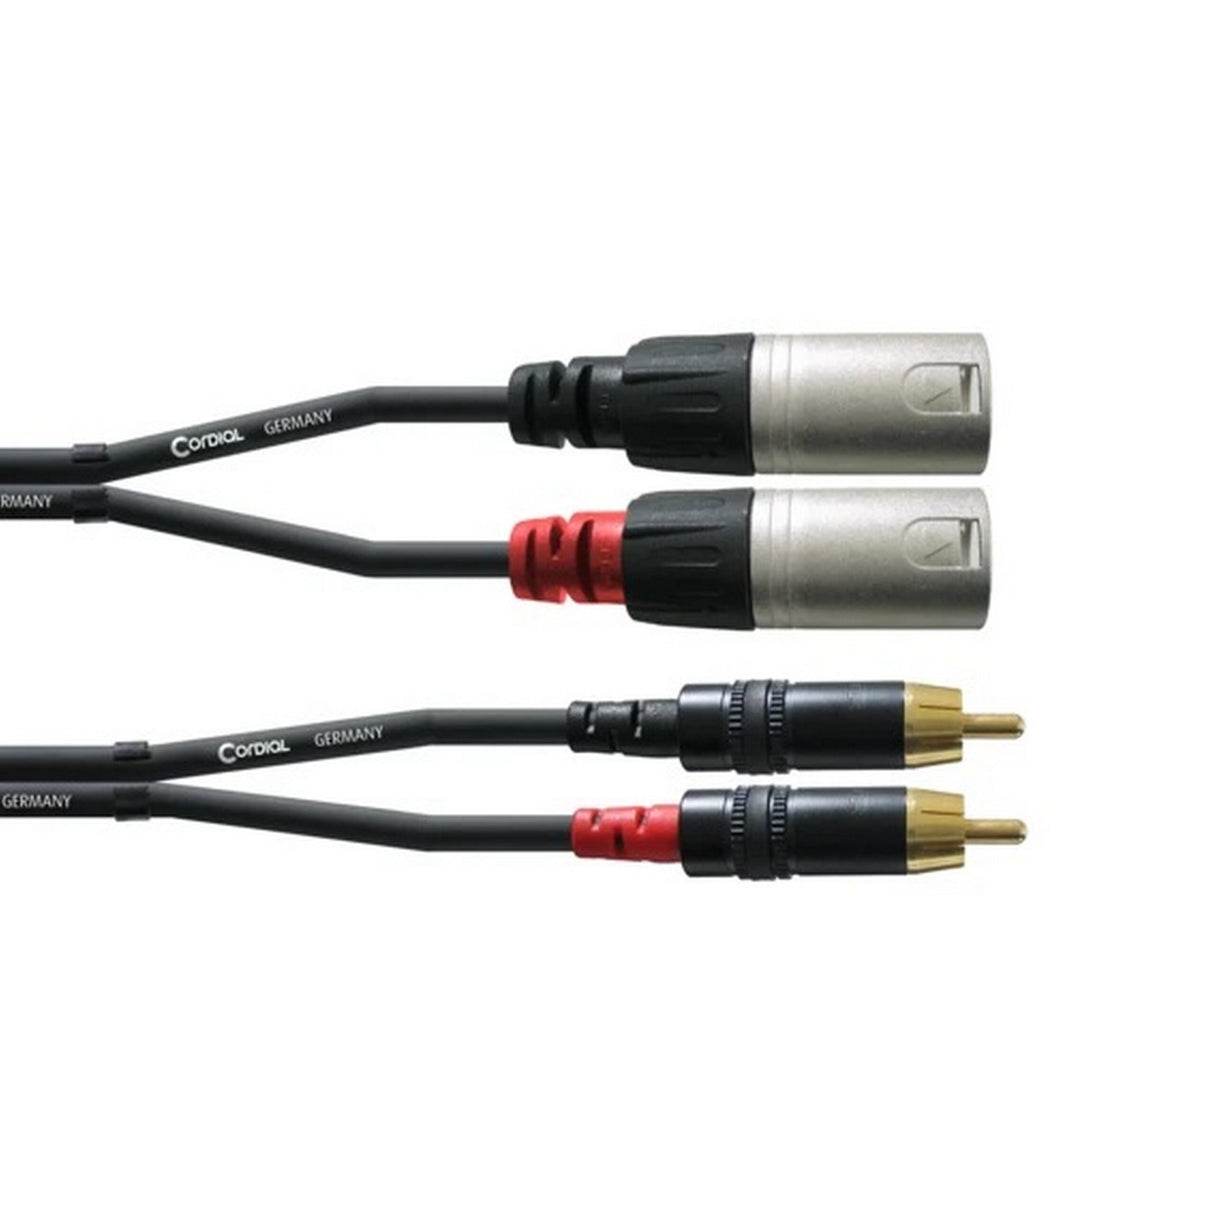 Cordial CFU 1.5 MC 2 x XLRM to 2 x RCA Twin Cable/Adapter, Black, 5-Feet